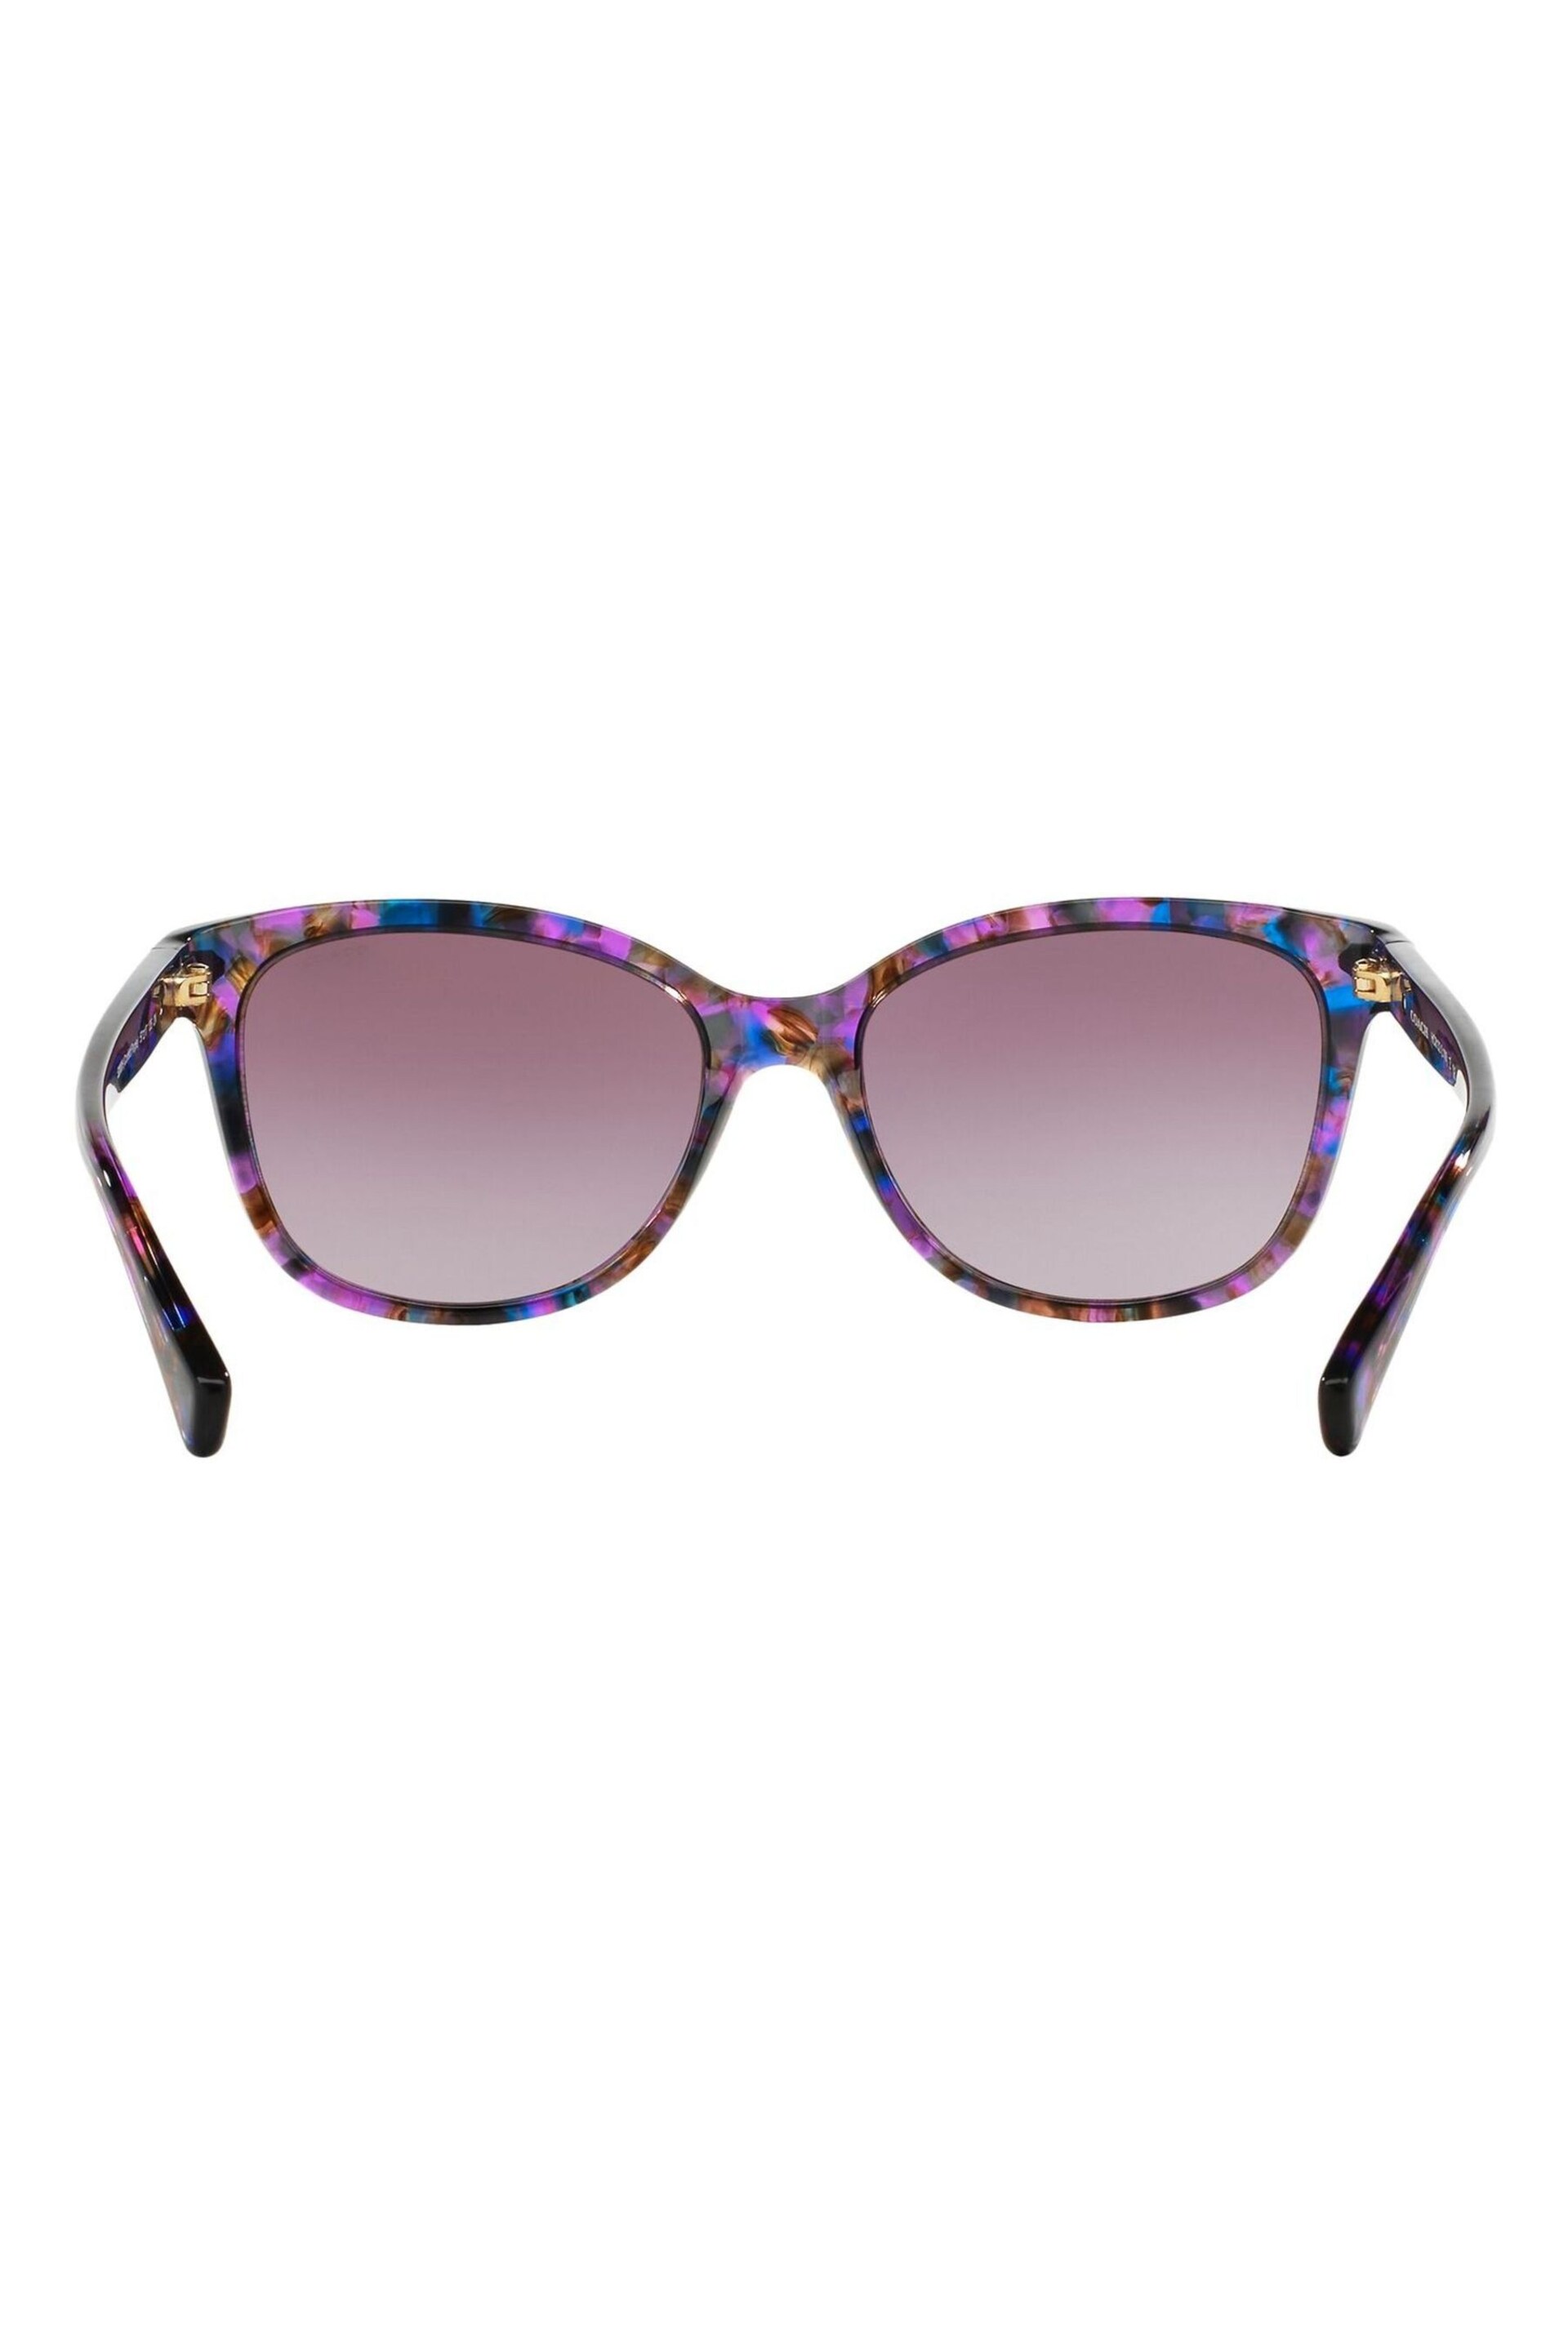 COACH Purple Sunglasses - Image 4 of 12